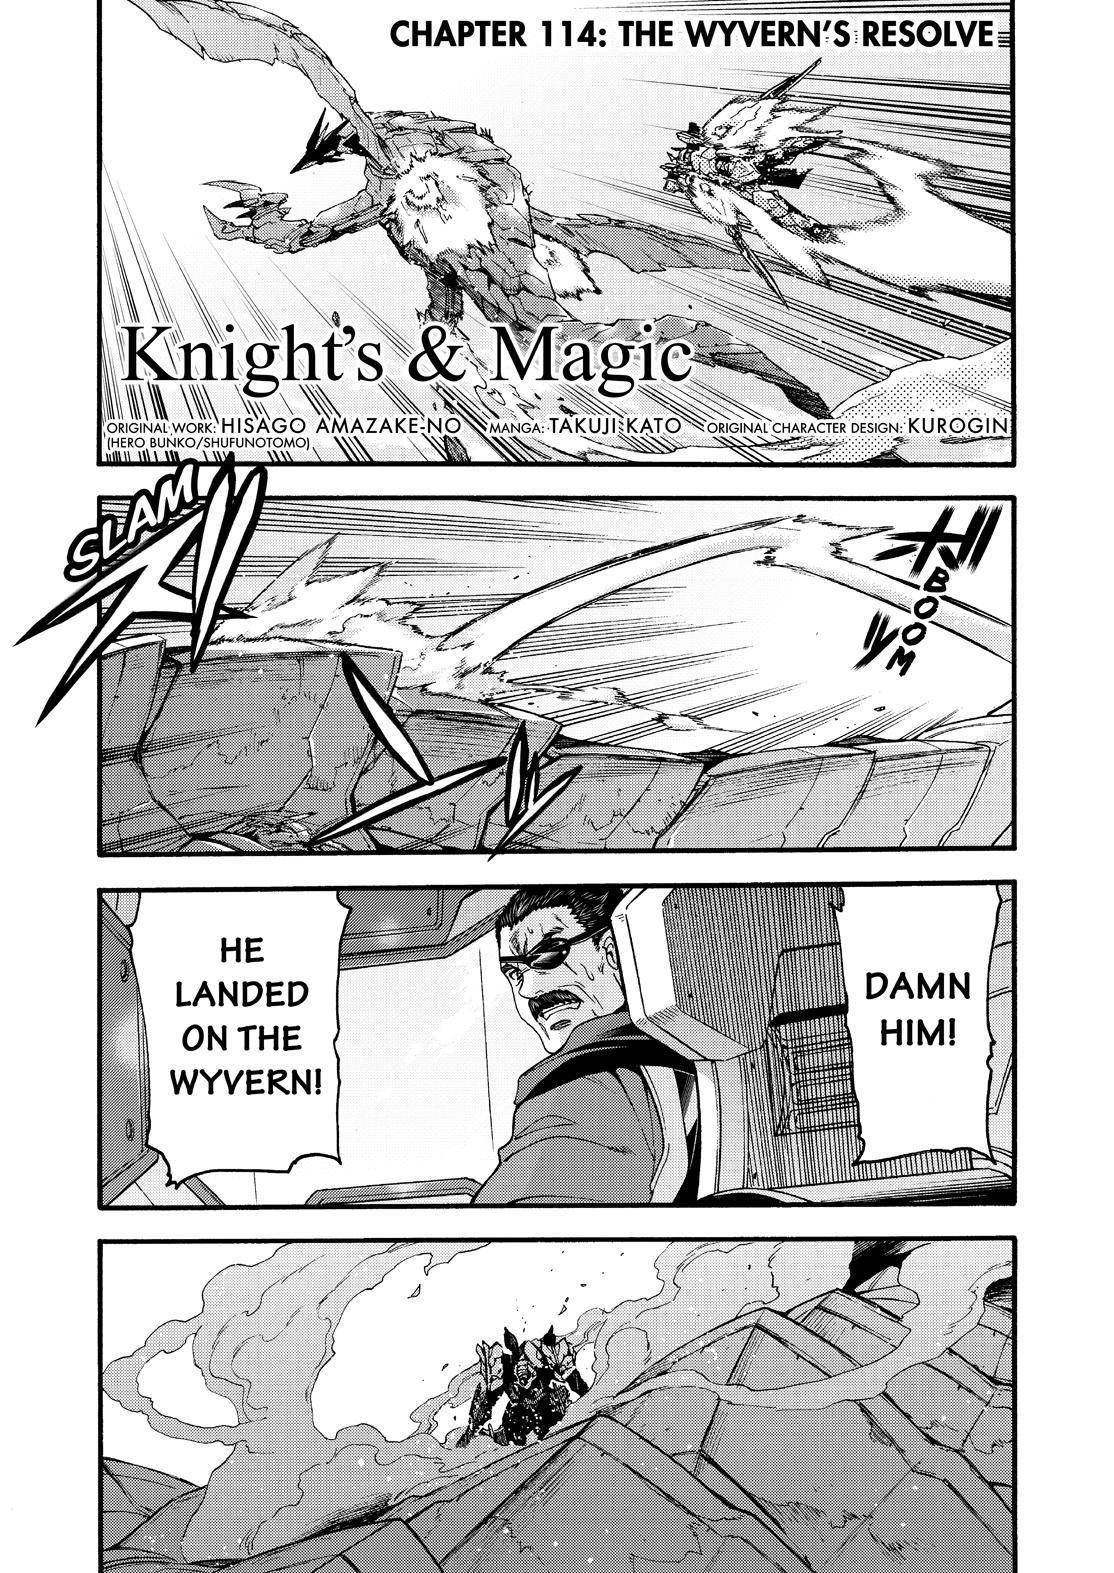 Knights & Magic - 114 page 2-7280b2ef